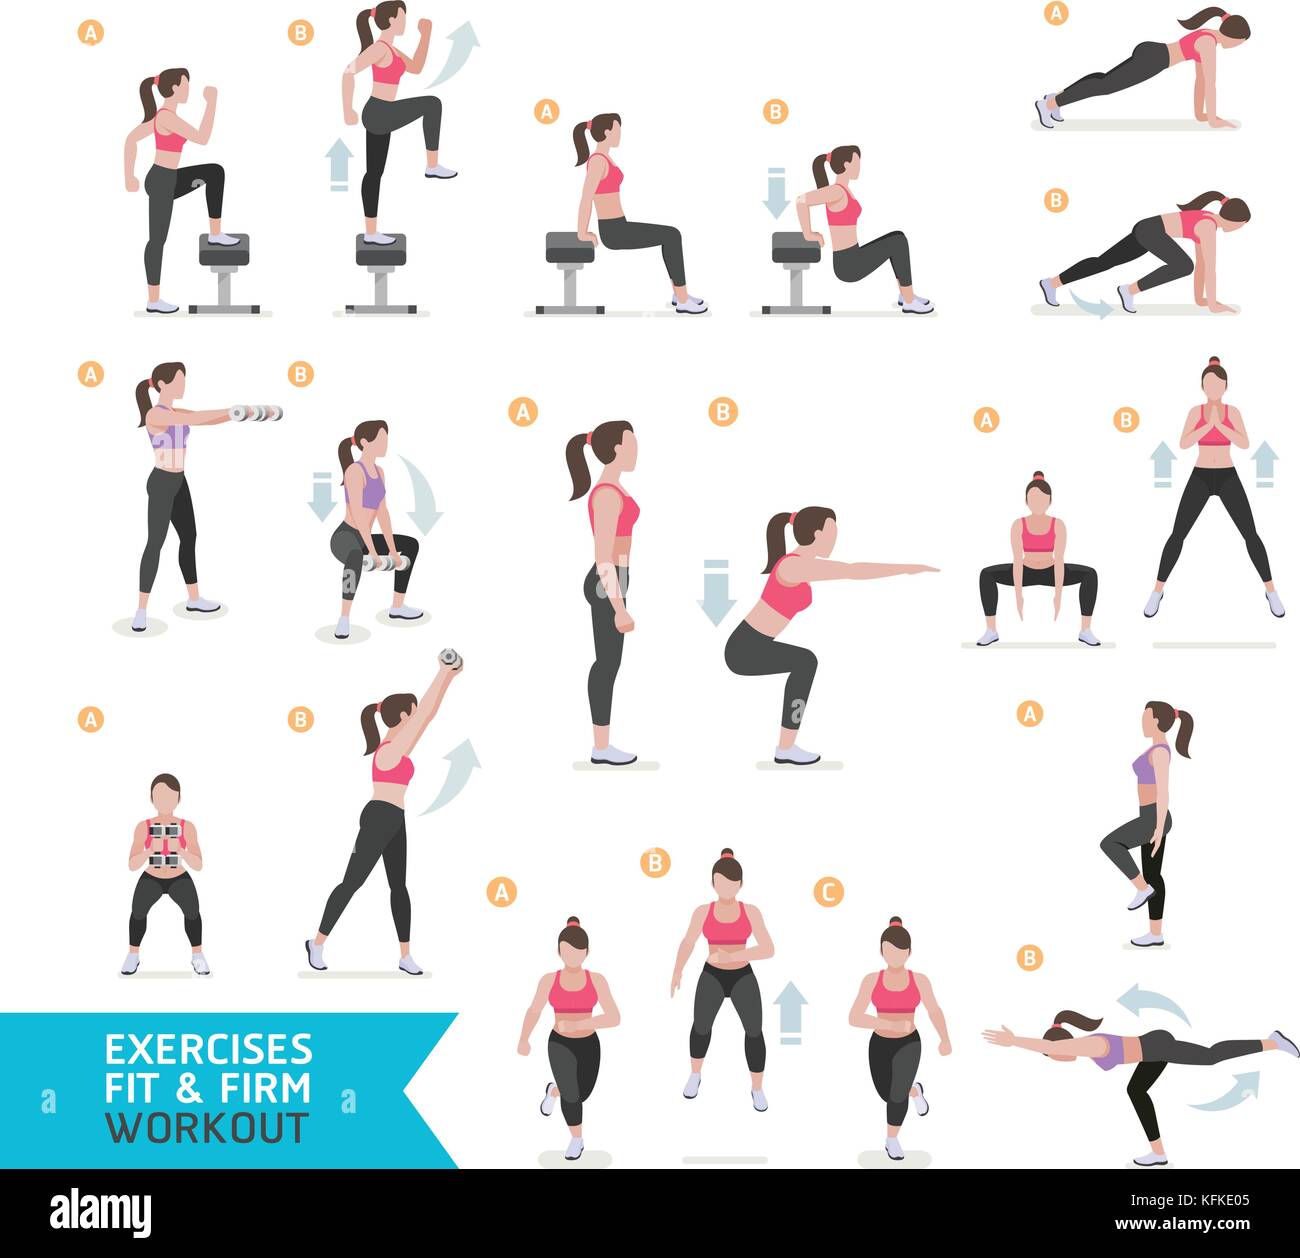 Frau workout Fitness, Aerobic und Übungen. Vector Illustration  Stock-Vektorgrafik - Alamy